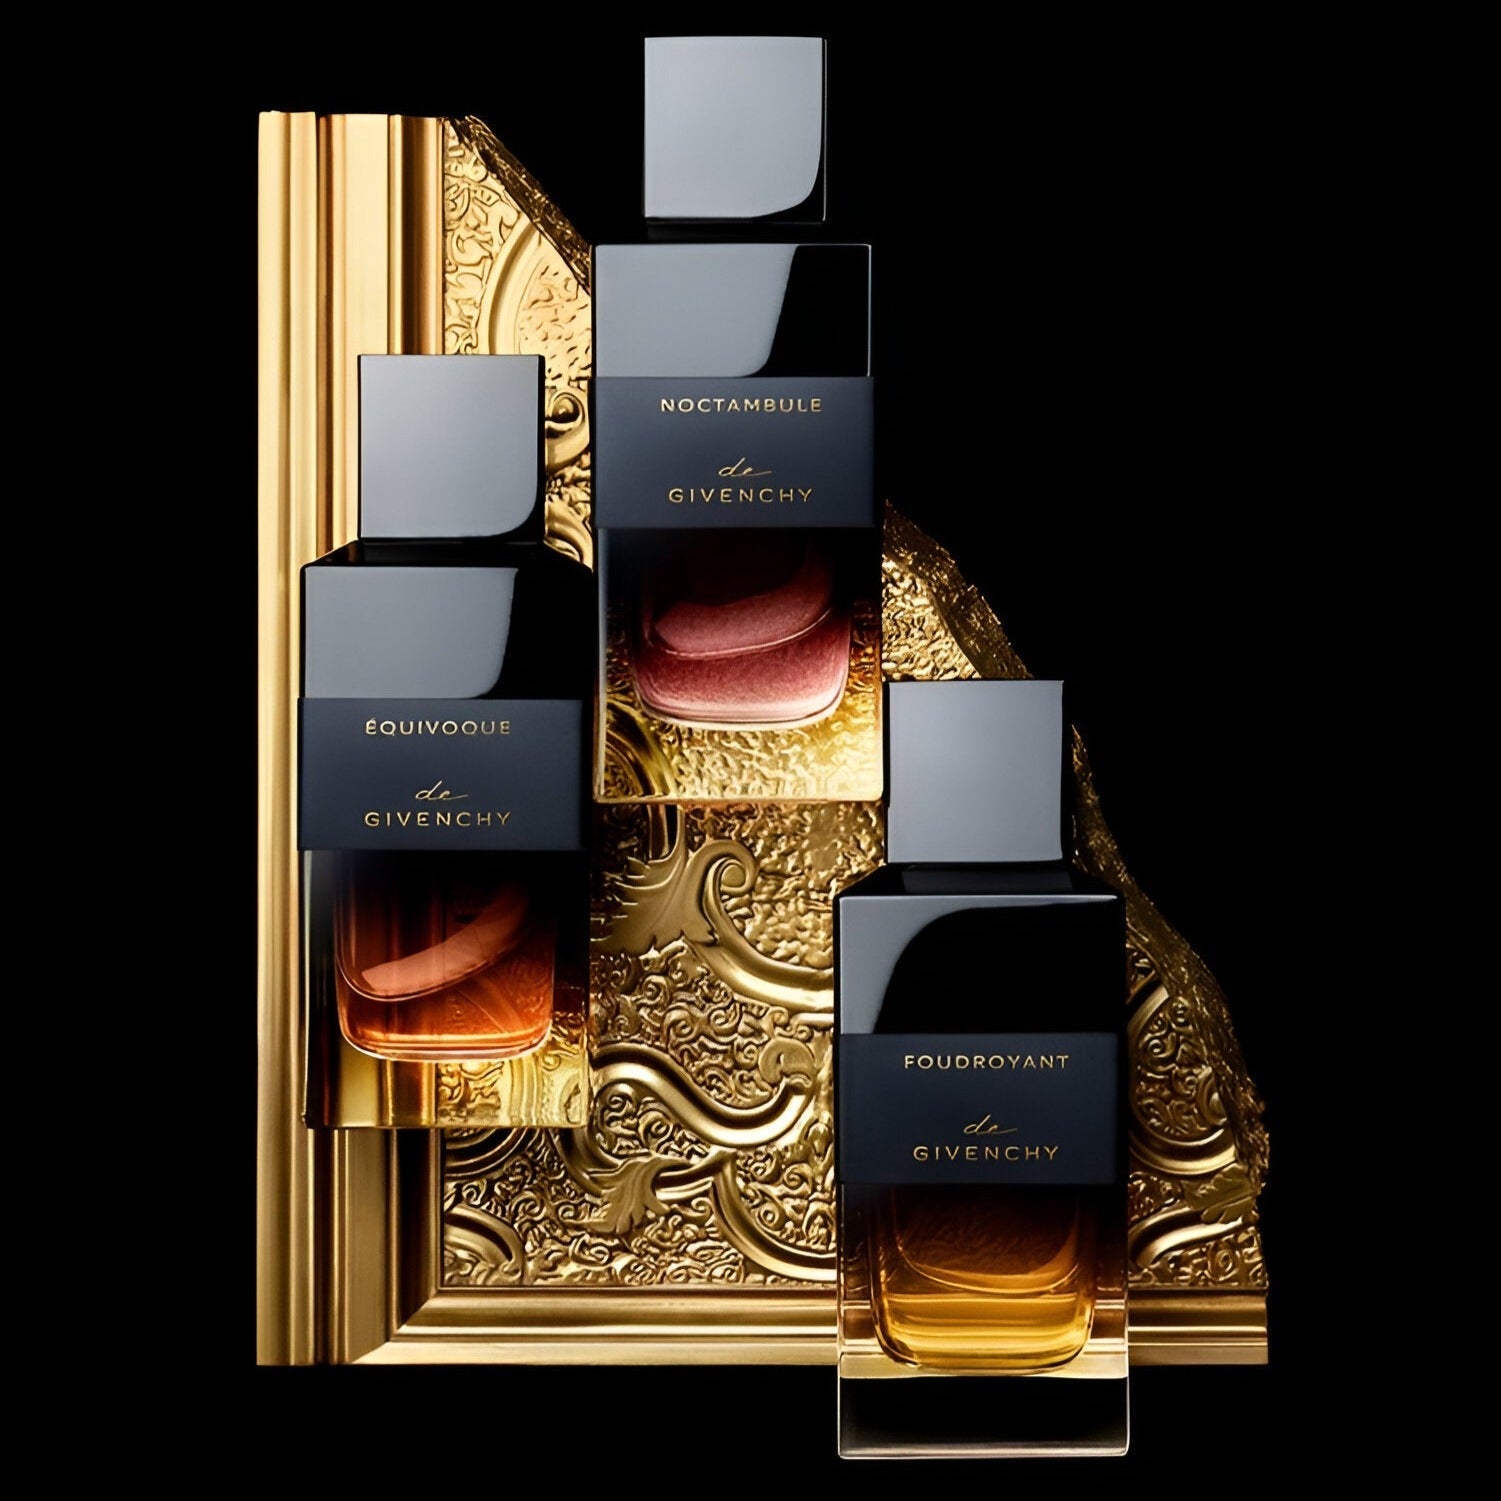 Givenchy La Collection Particuliere Faux Semblant EDP Intense | My Perfume Shop Australia